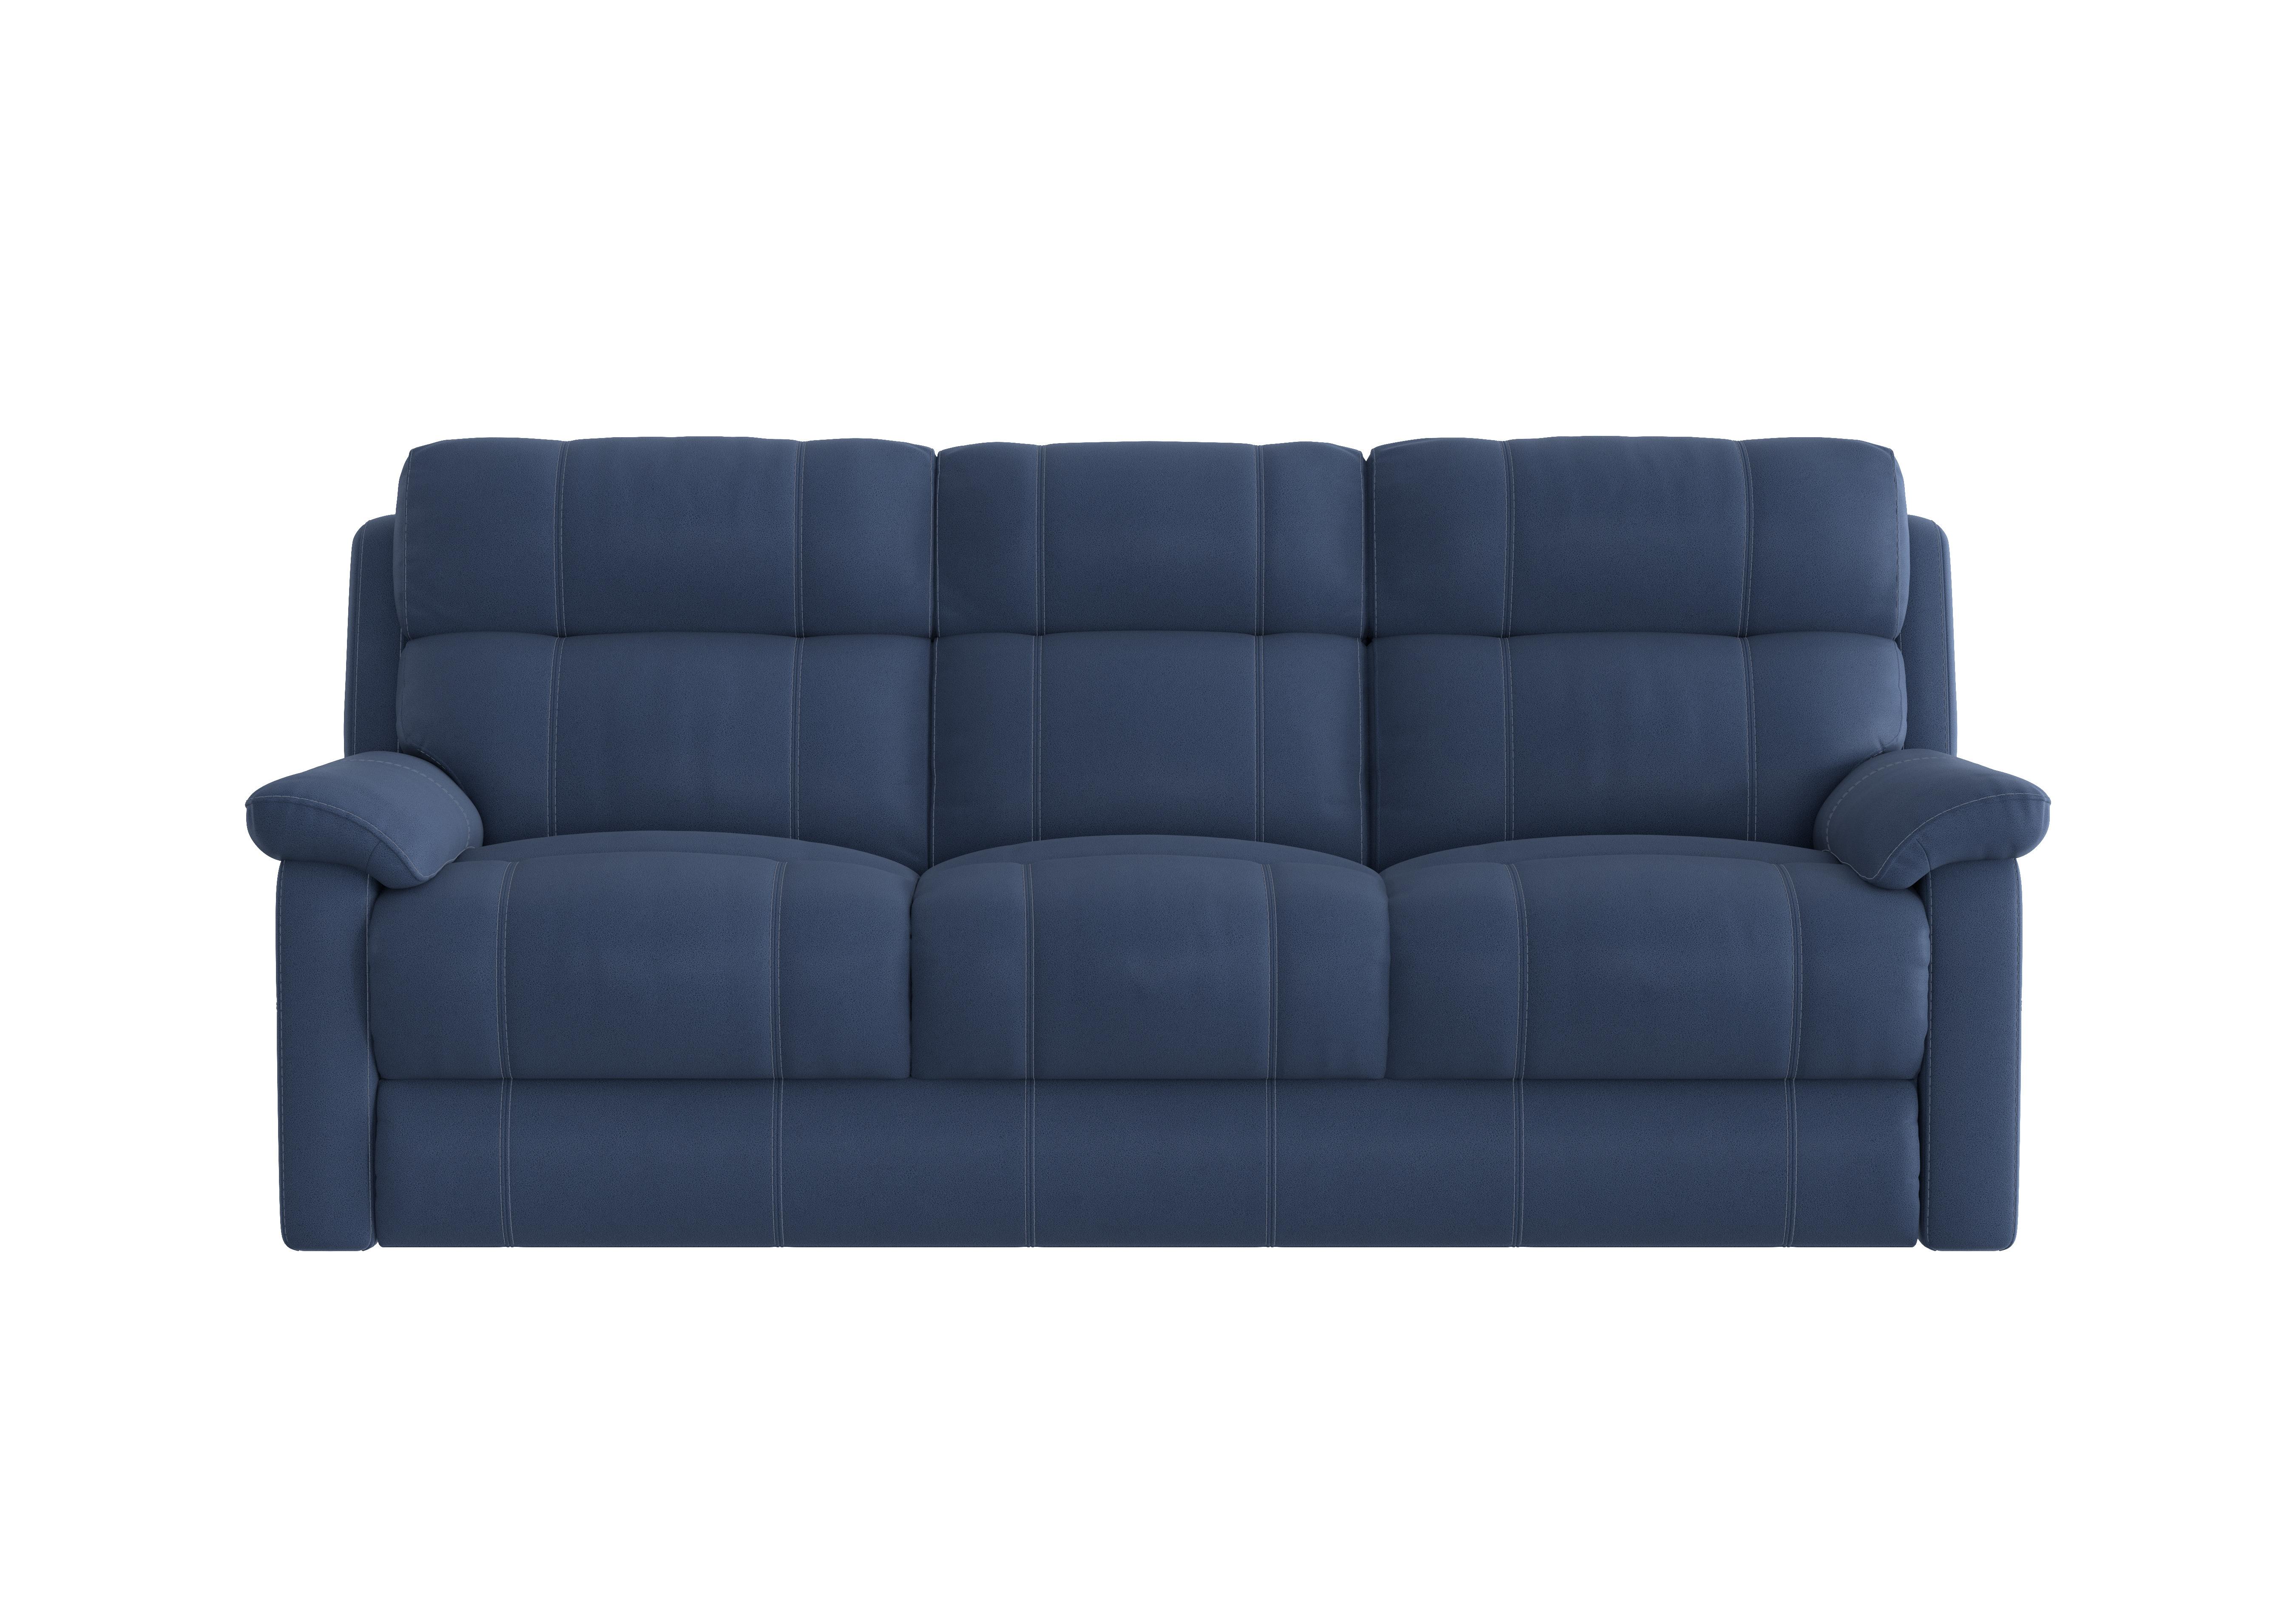 Relax Station Komodo 3 Seater Fabric Sofa in Bfa-Blj-R10 Blue on Furniture Village